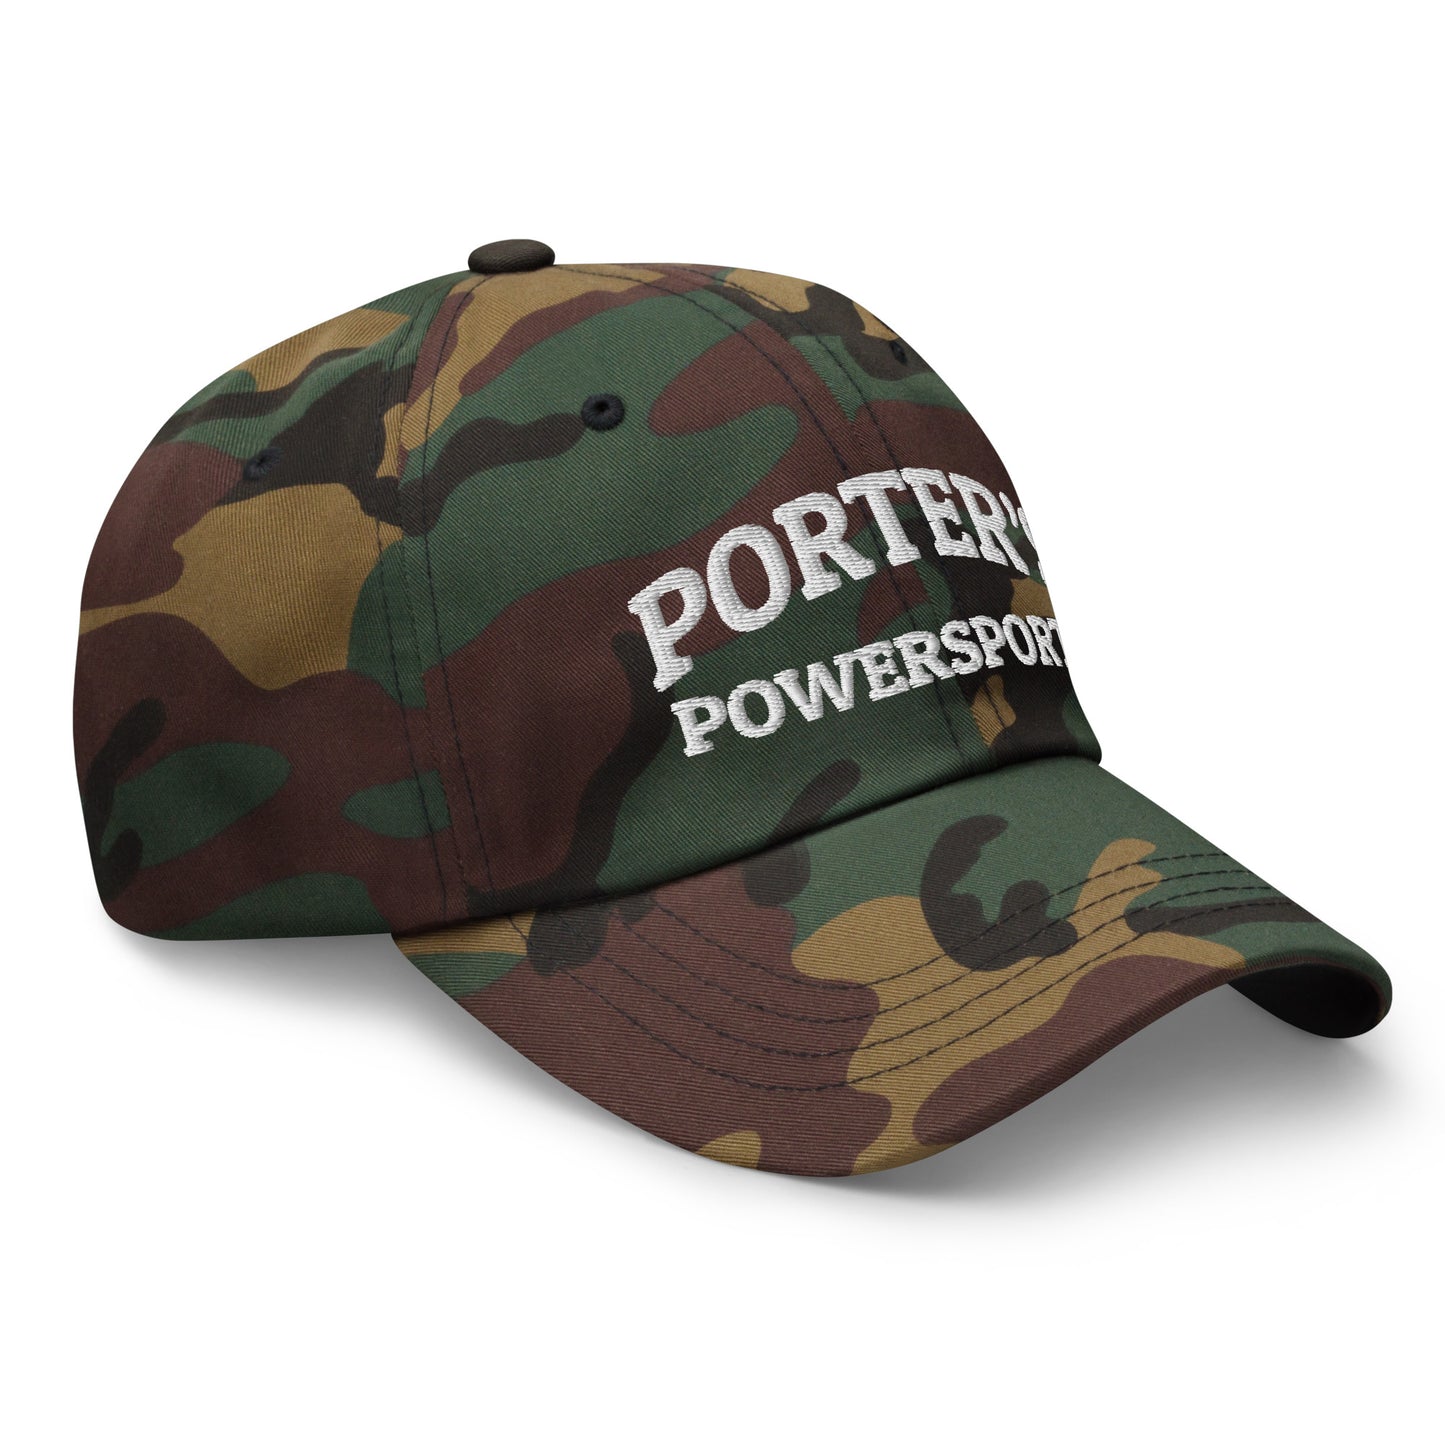 Porter's Powersports Dad Hat